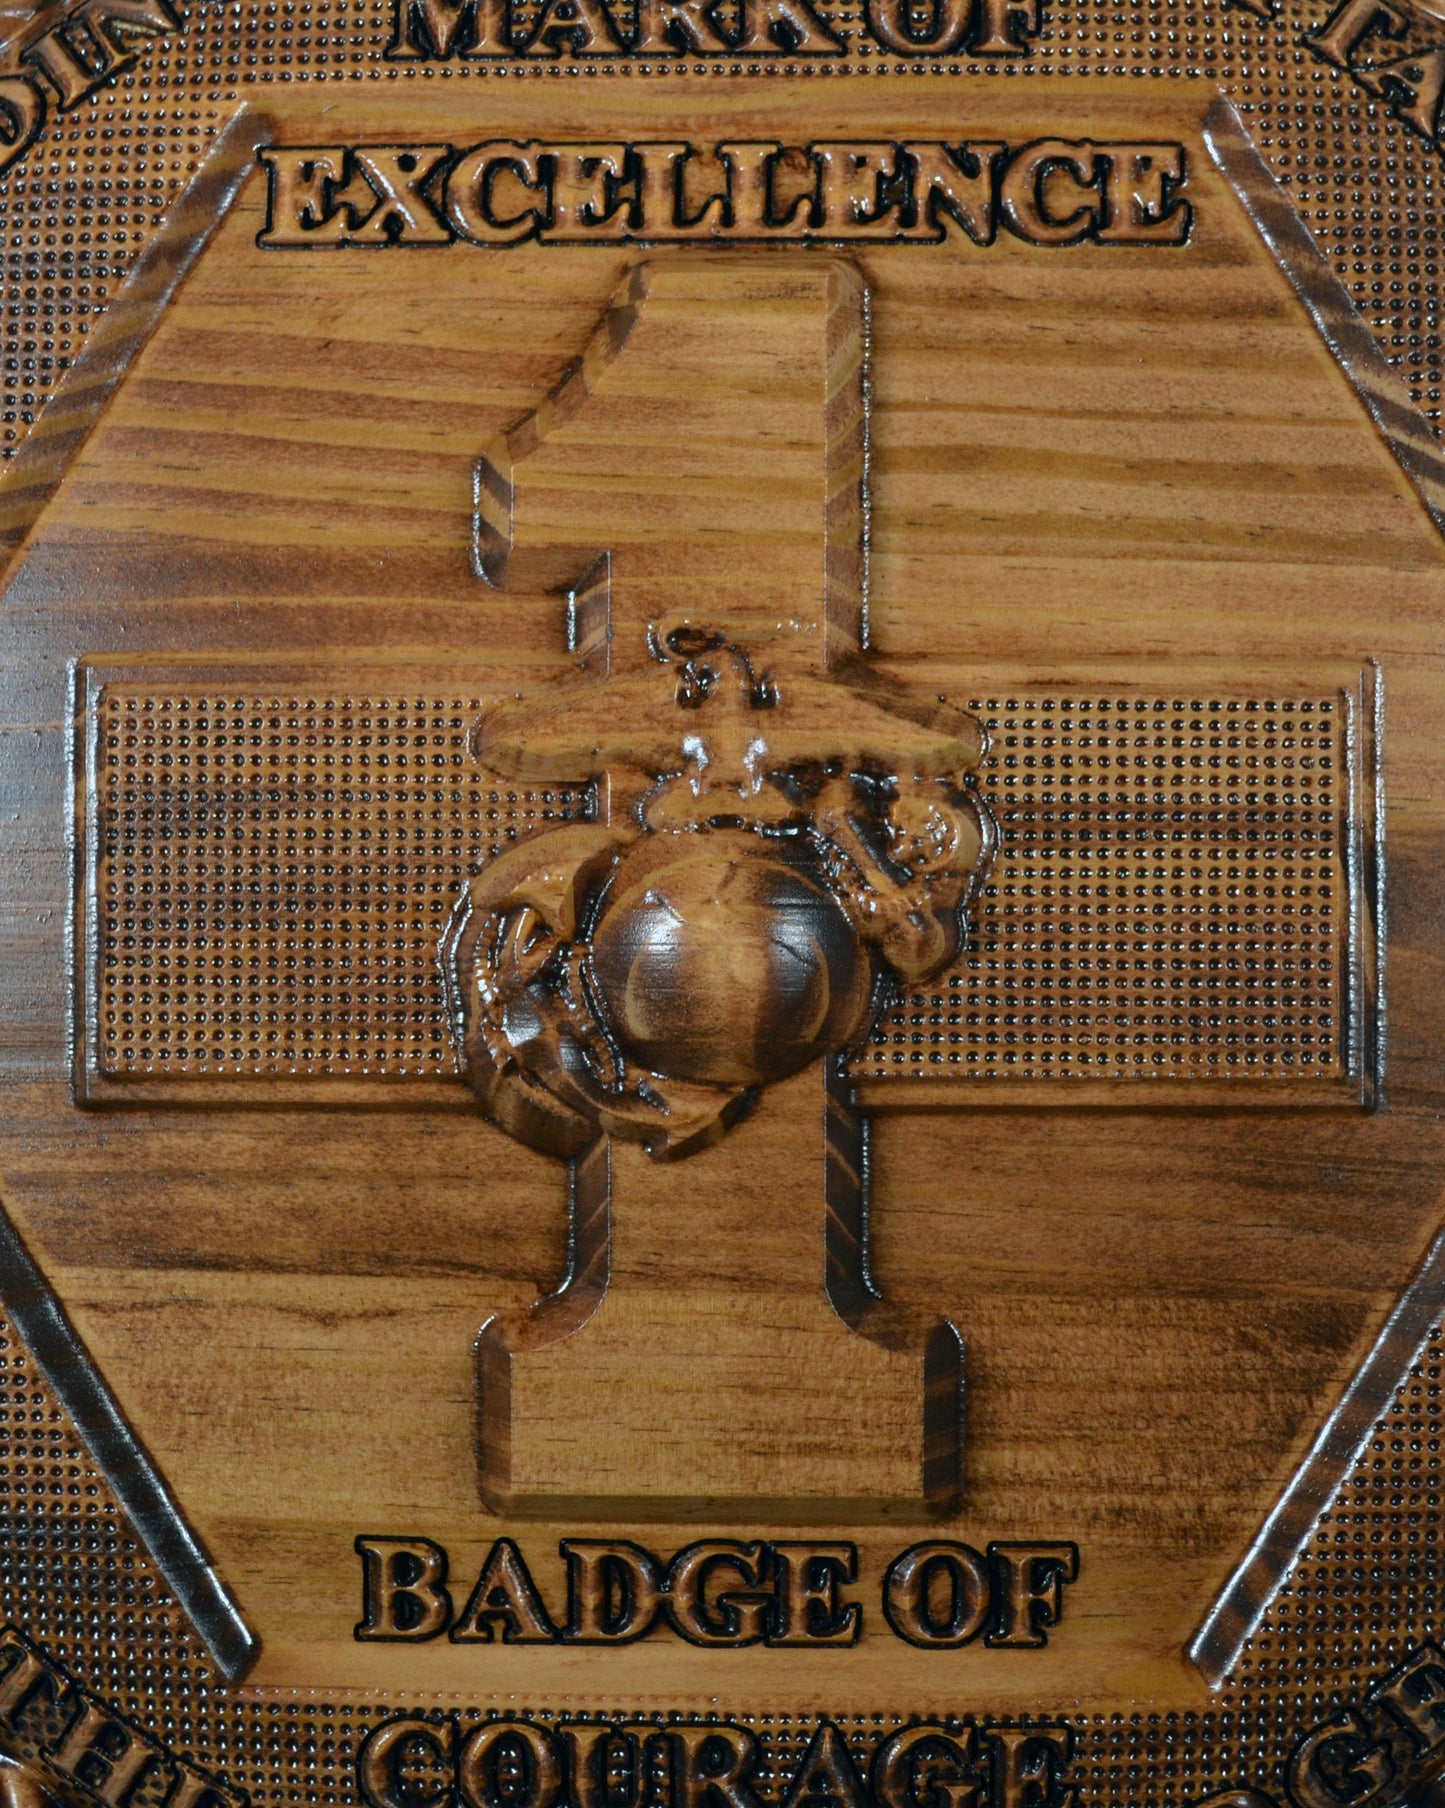 USMC 1st Landing Support Battalion, Red Patchers, 3d wood carving, military plaque